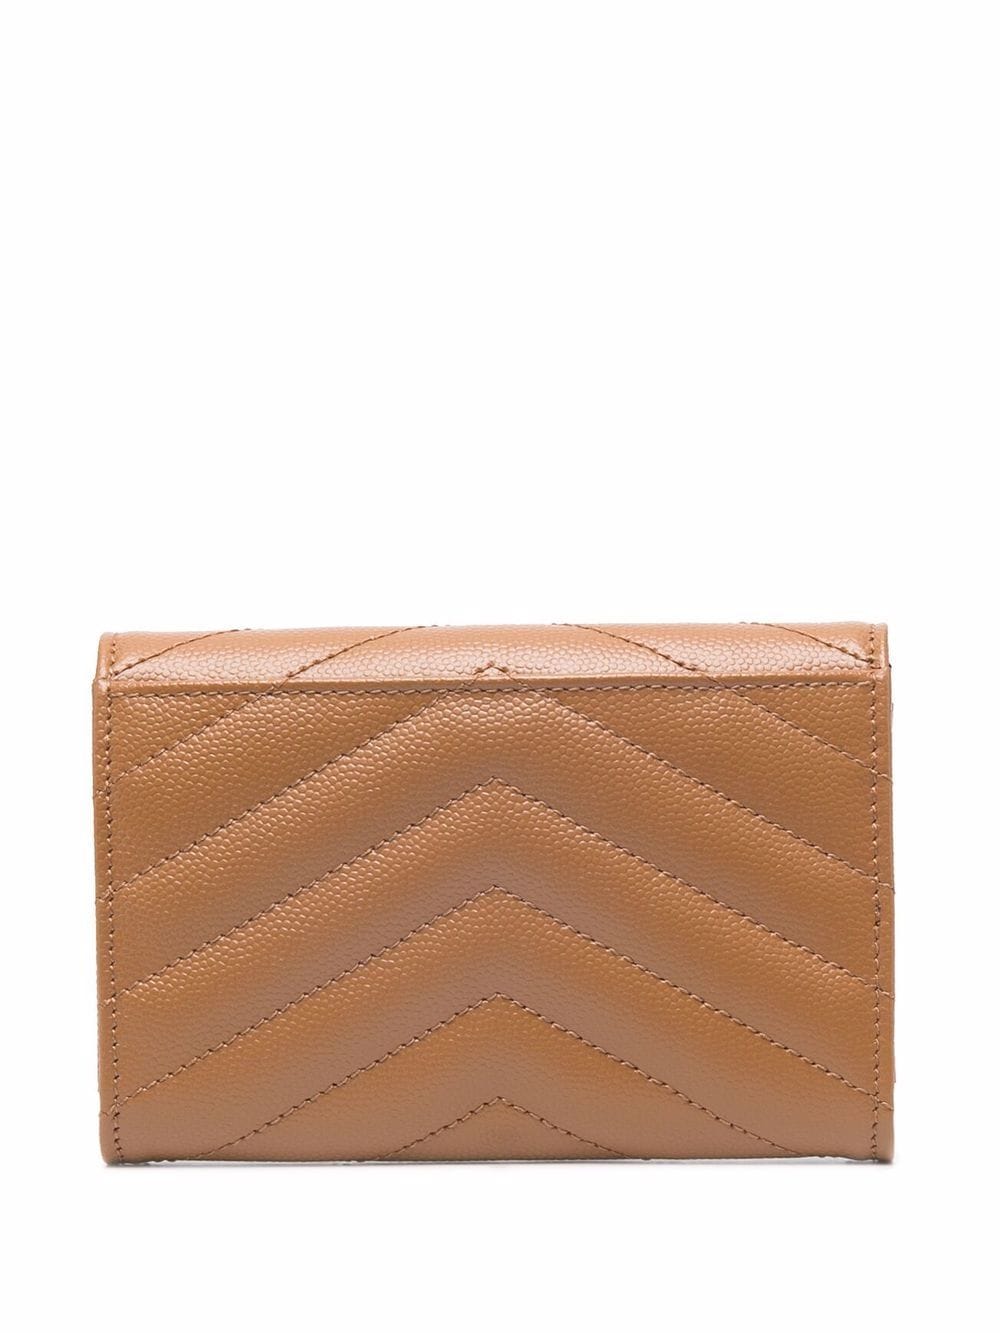 Saint Laurent Monogram Quilted Wallet - Brown - Size: Regular - Female